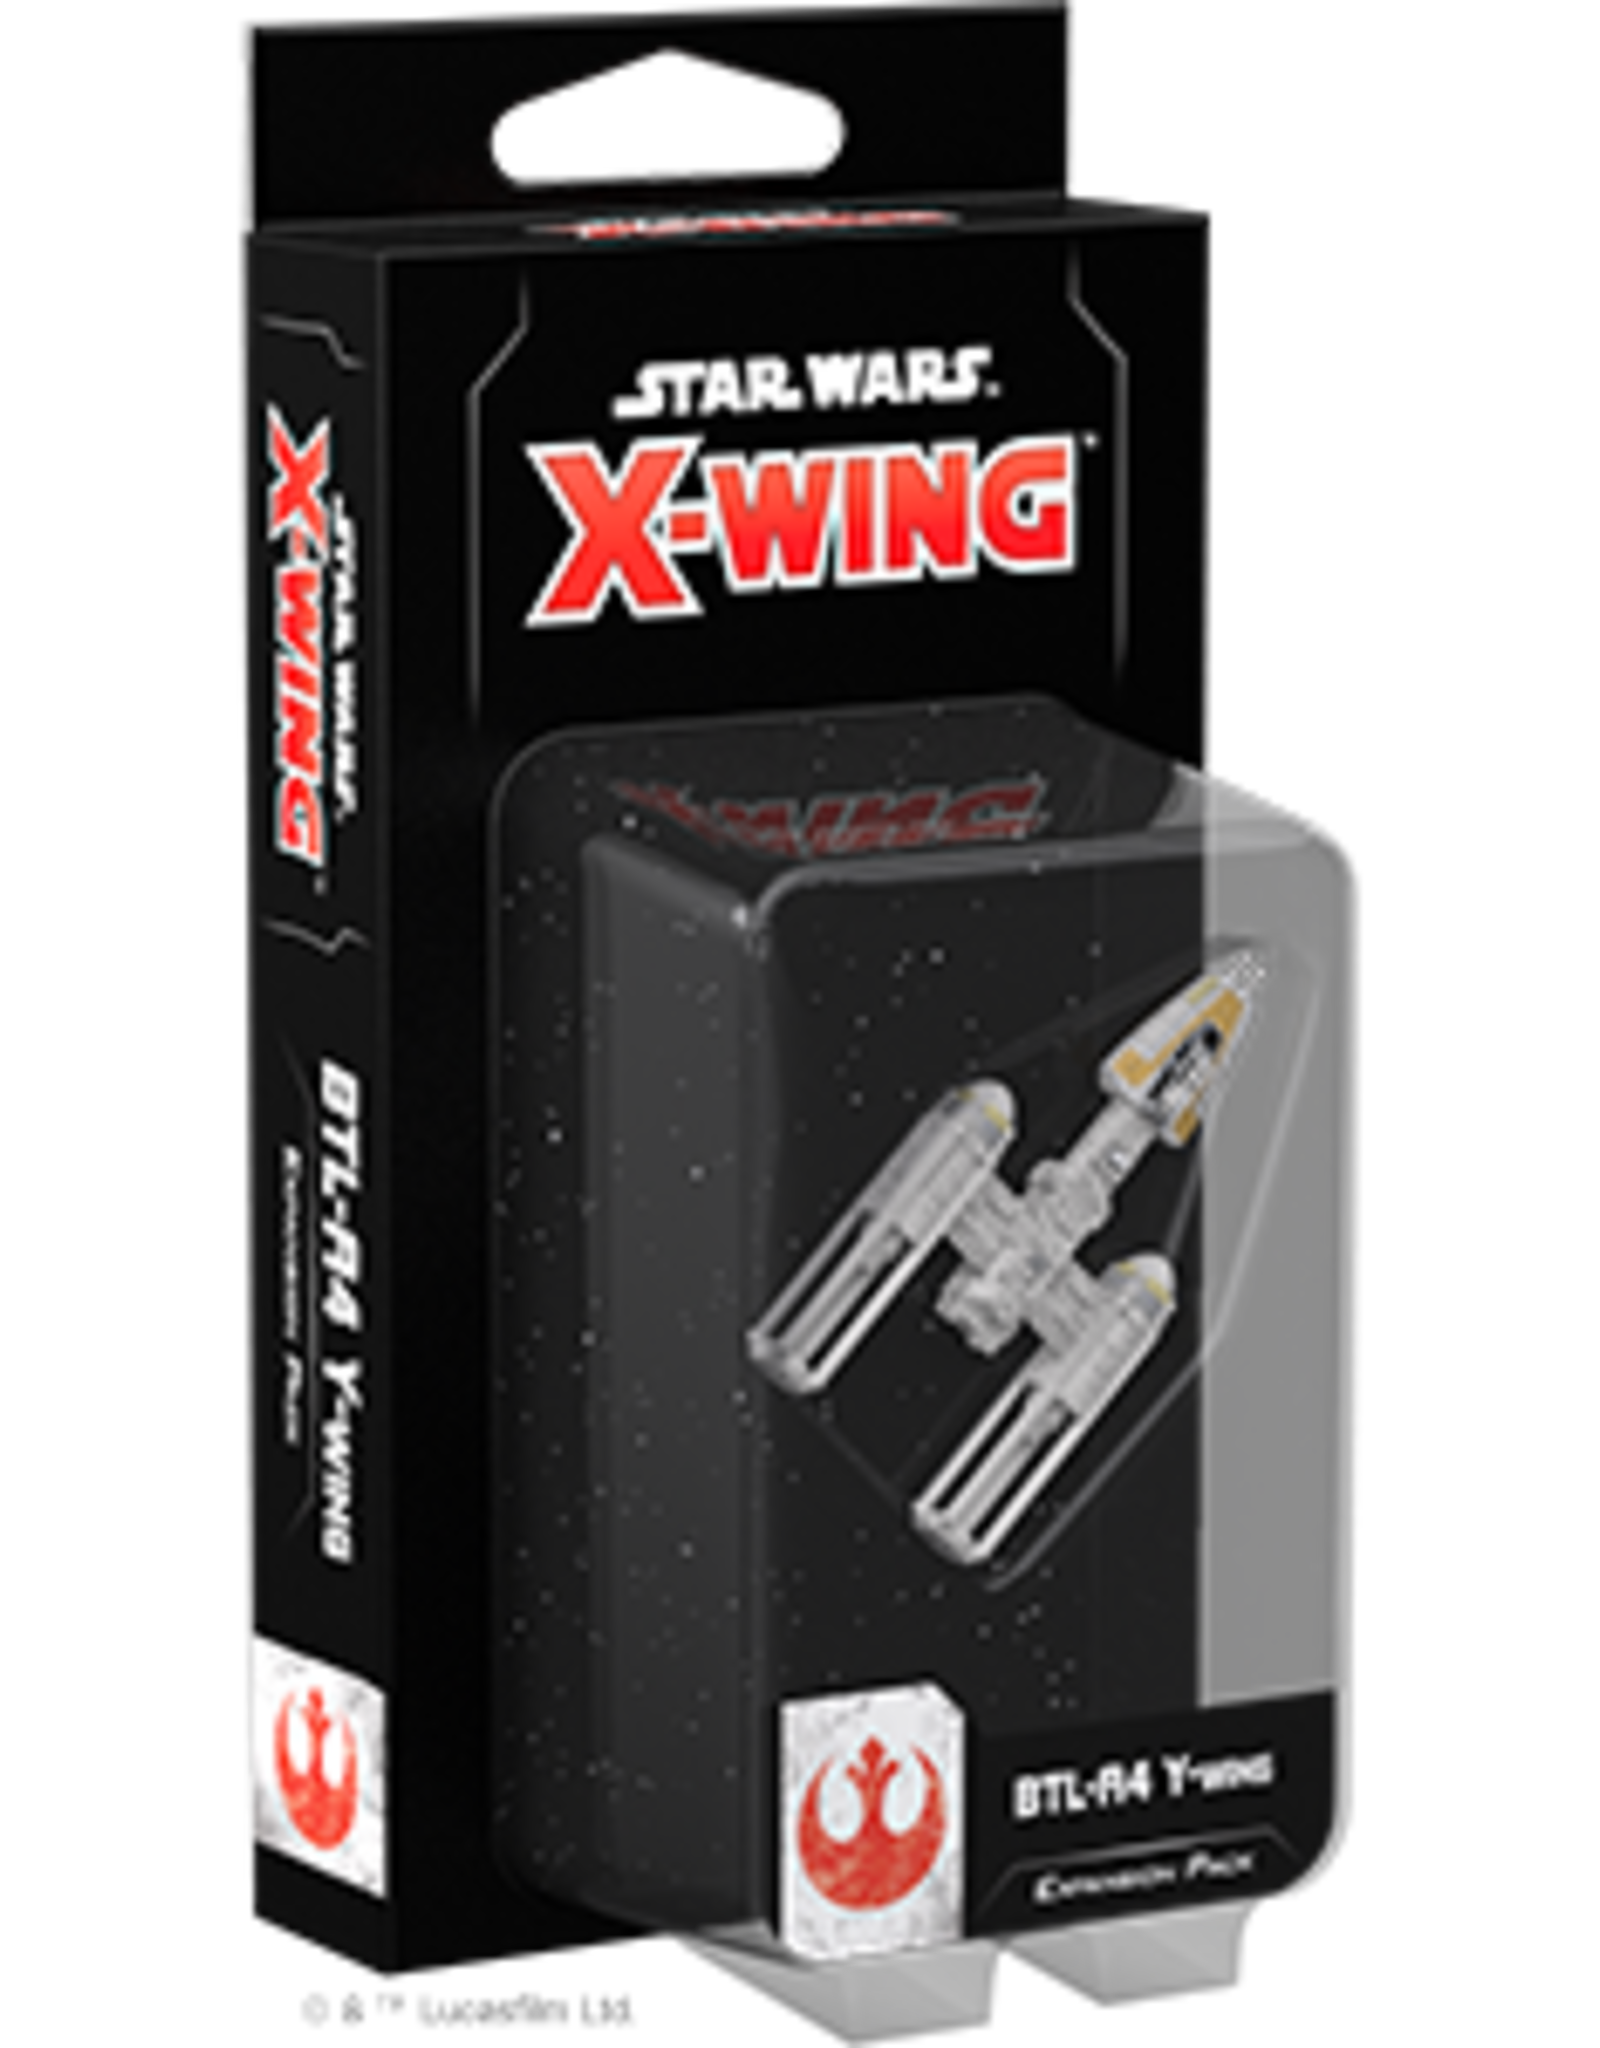 FFG Star Wars X-Wing 2.0: BTL-A4 Y-Wing Expansion Pack